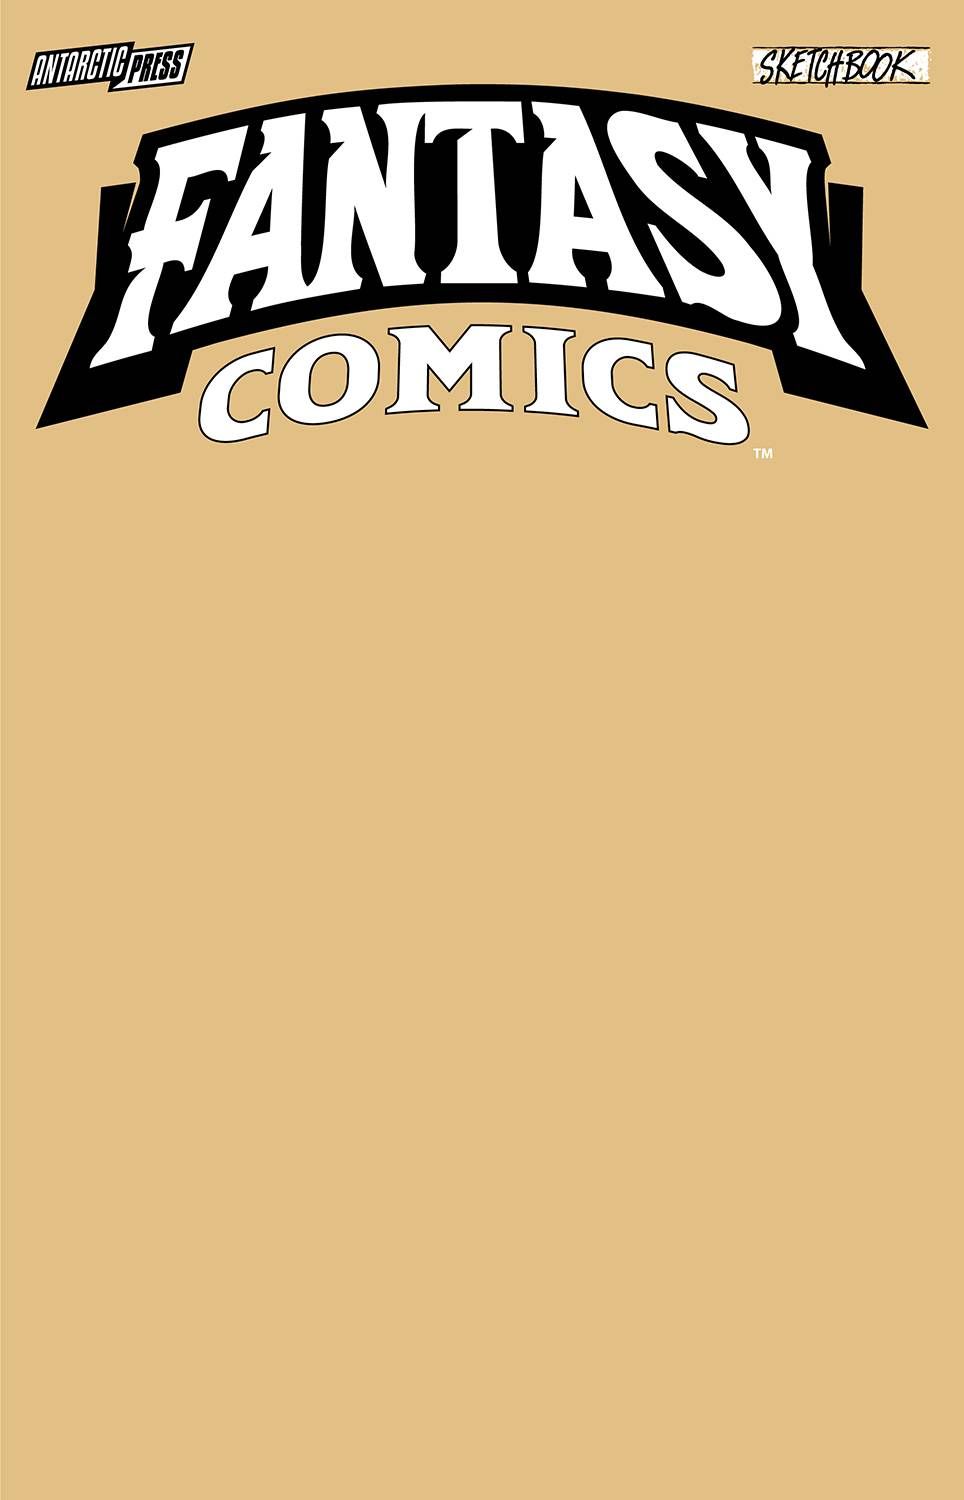 Fantasy Comics Sketchbook #nn Comic